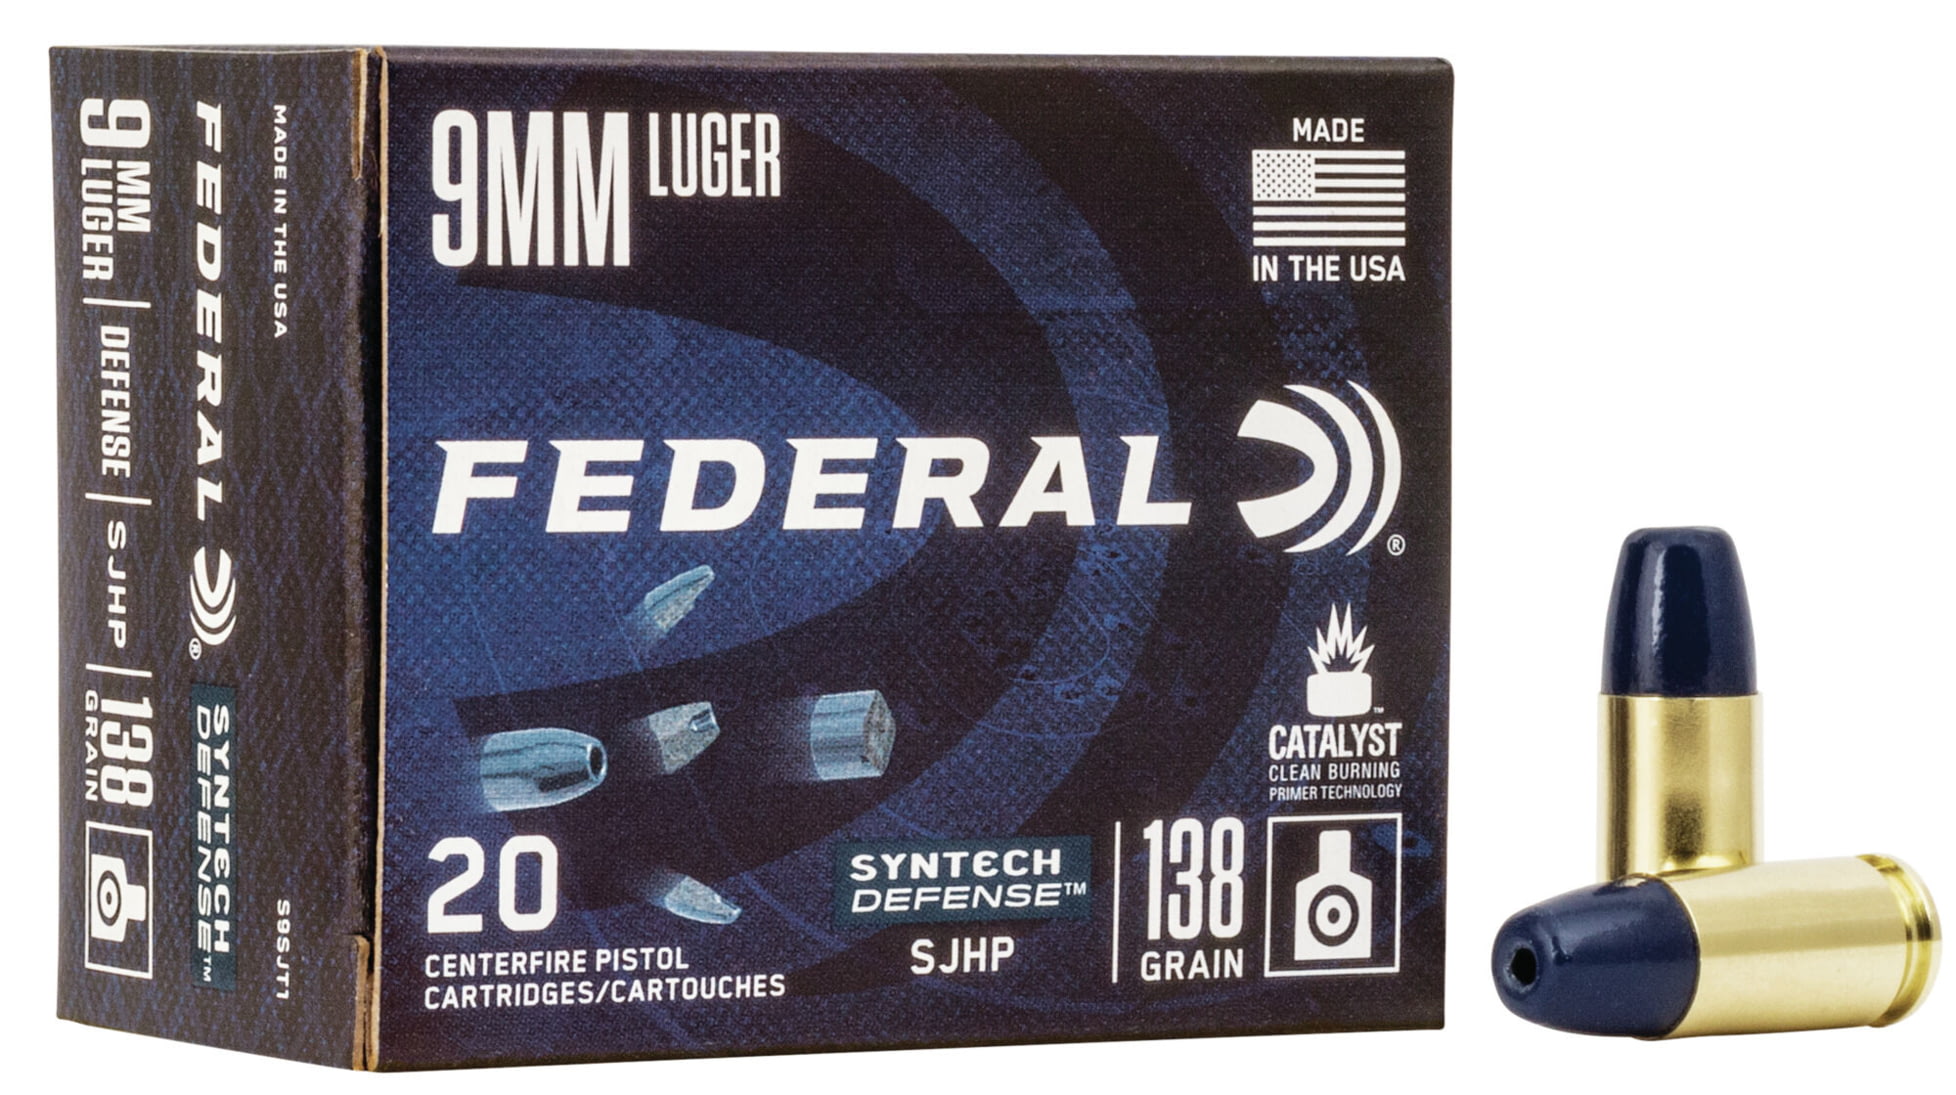 Federal Premium Centerfire Handgun Ammunition 9mm Luger 138 grain Segmented Hollow Point Centerfire Pistol Ammunition